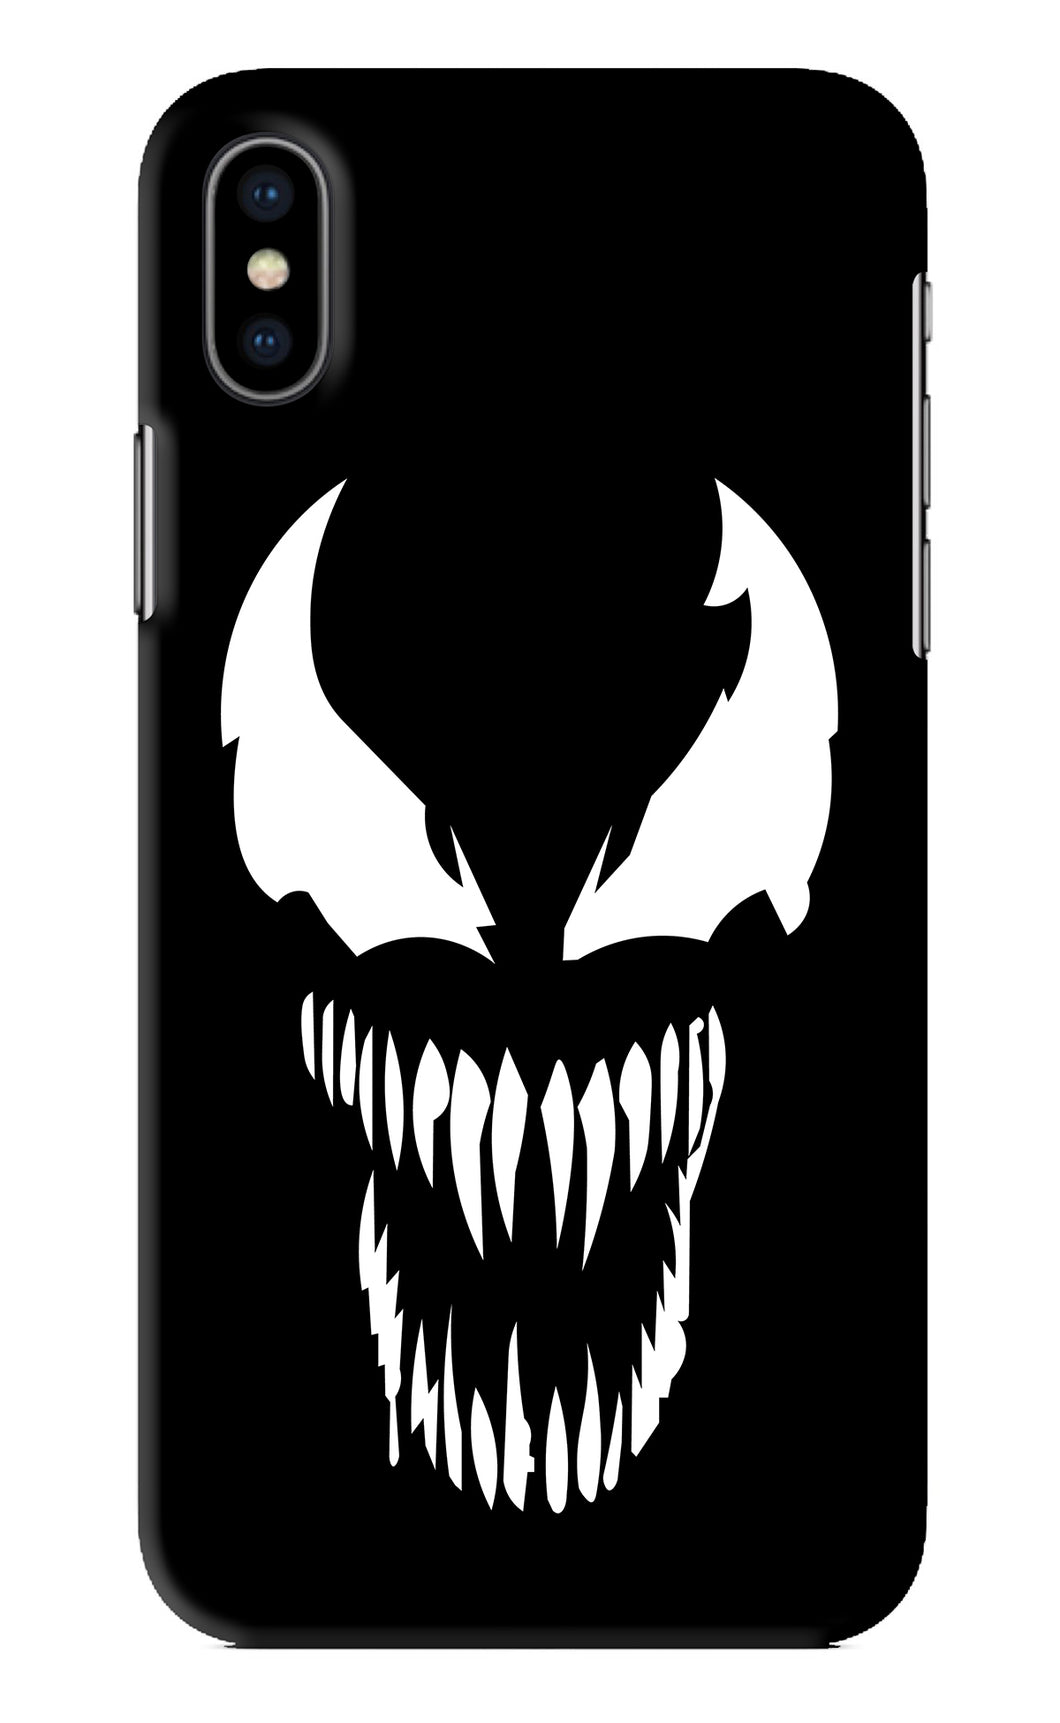 Venom iPhone X Back Skin Wrap